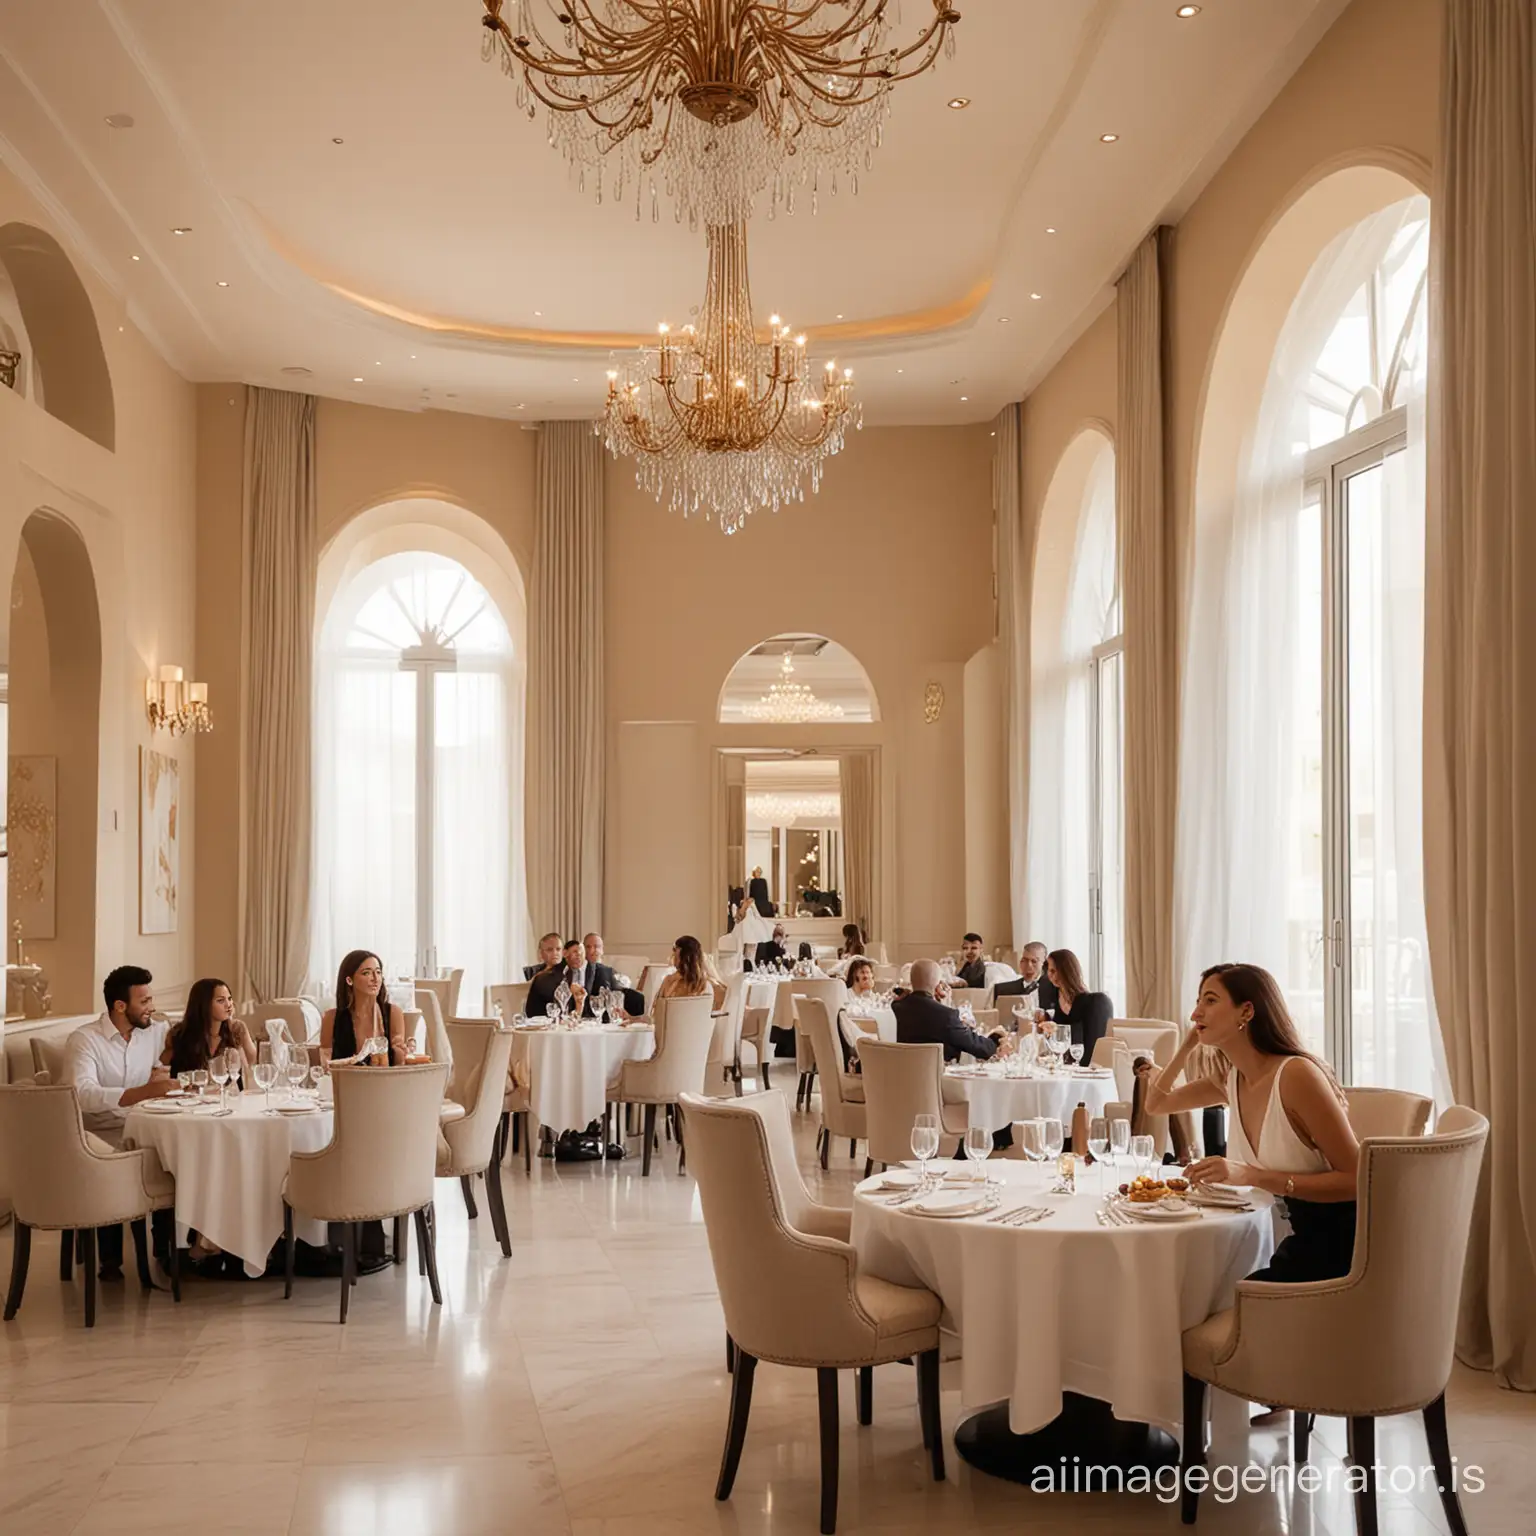 Luxury-Dining-Experience-Elegant-Guests-Enjoying-Fine-Cuisine-in-Bahrain-5Star-Hotel